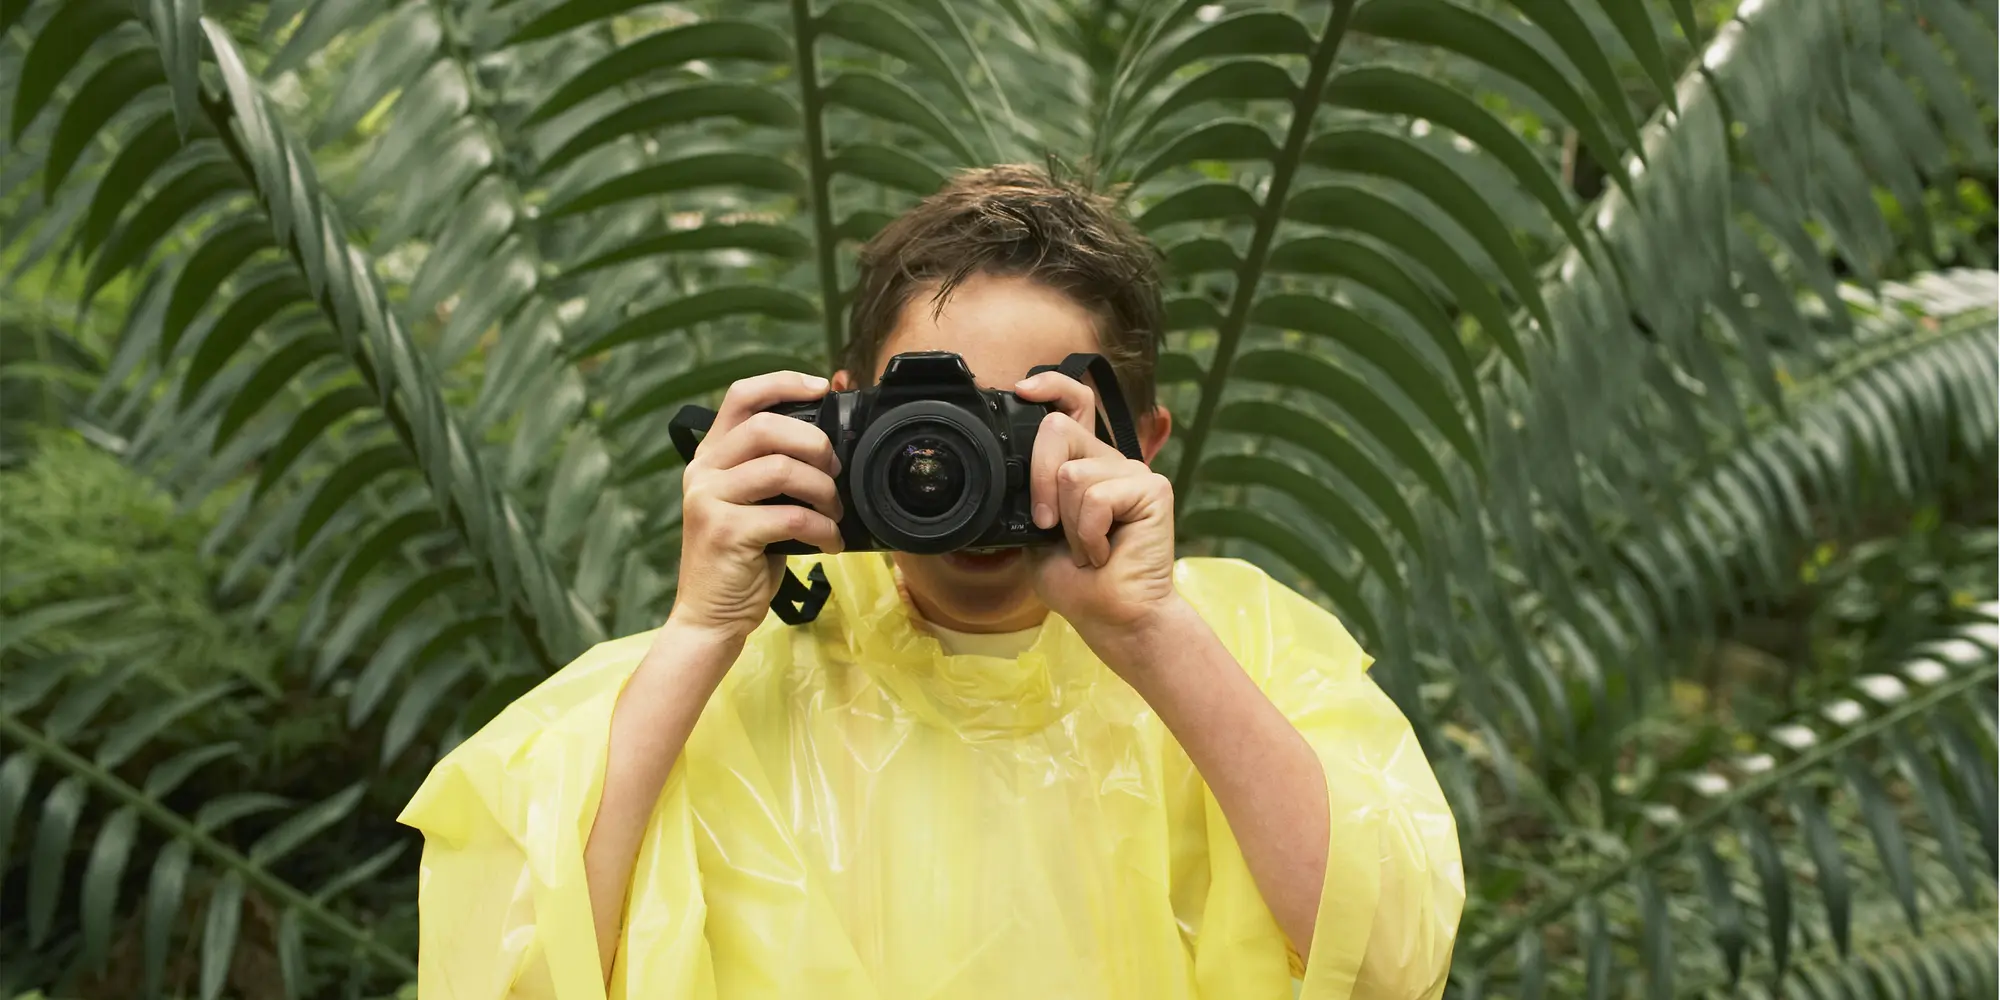 En kille i regnjacka tar bilder i skog